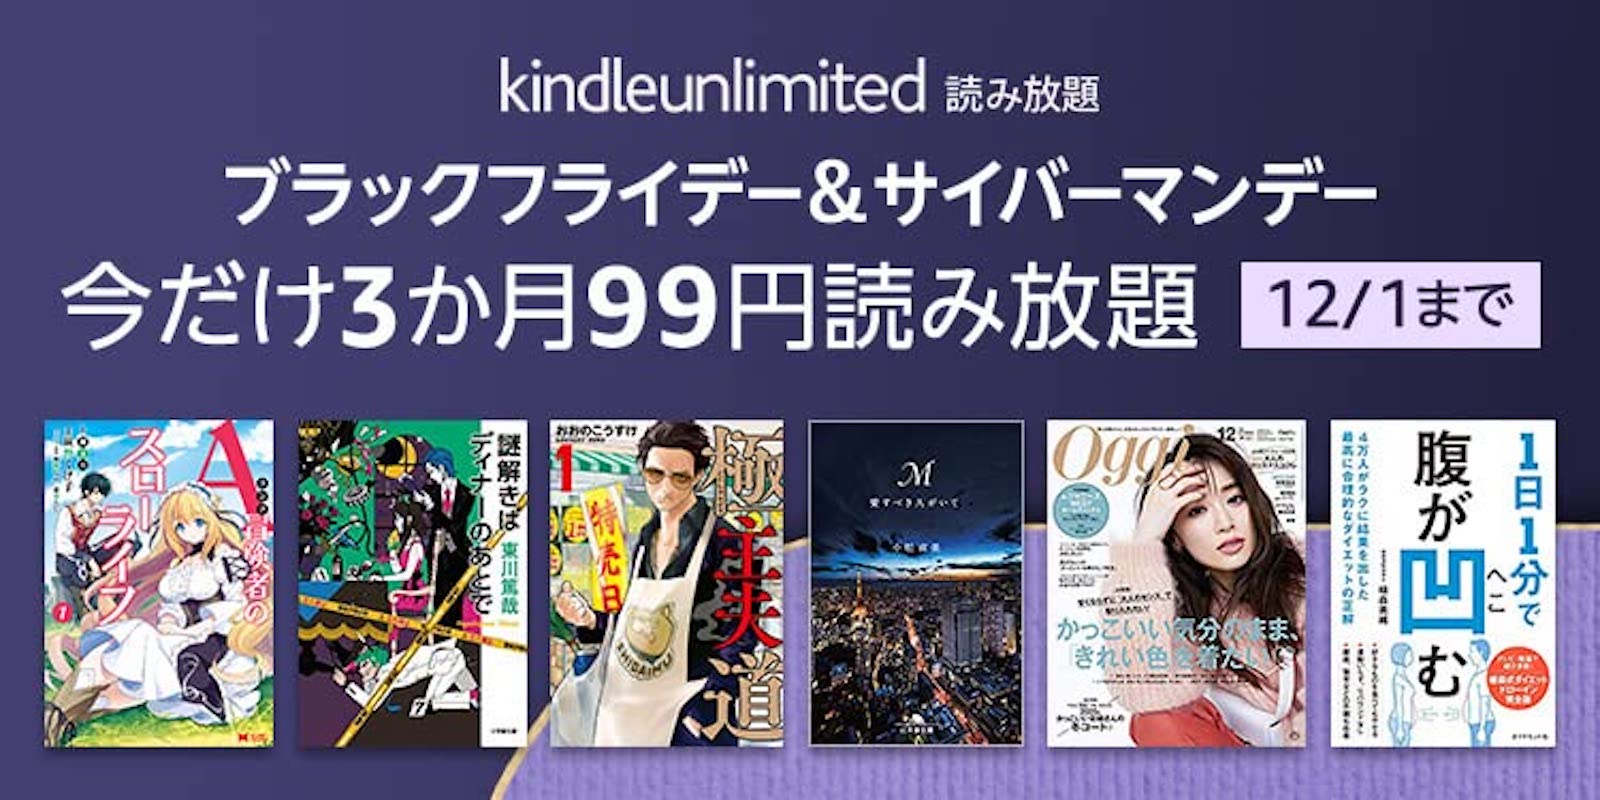 Kindle Unlimited 3month sale